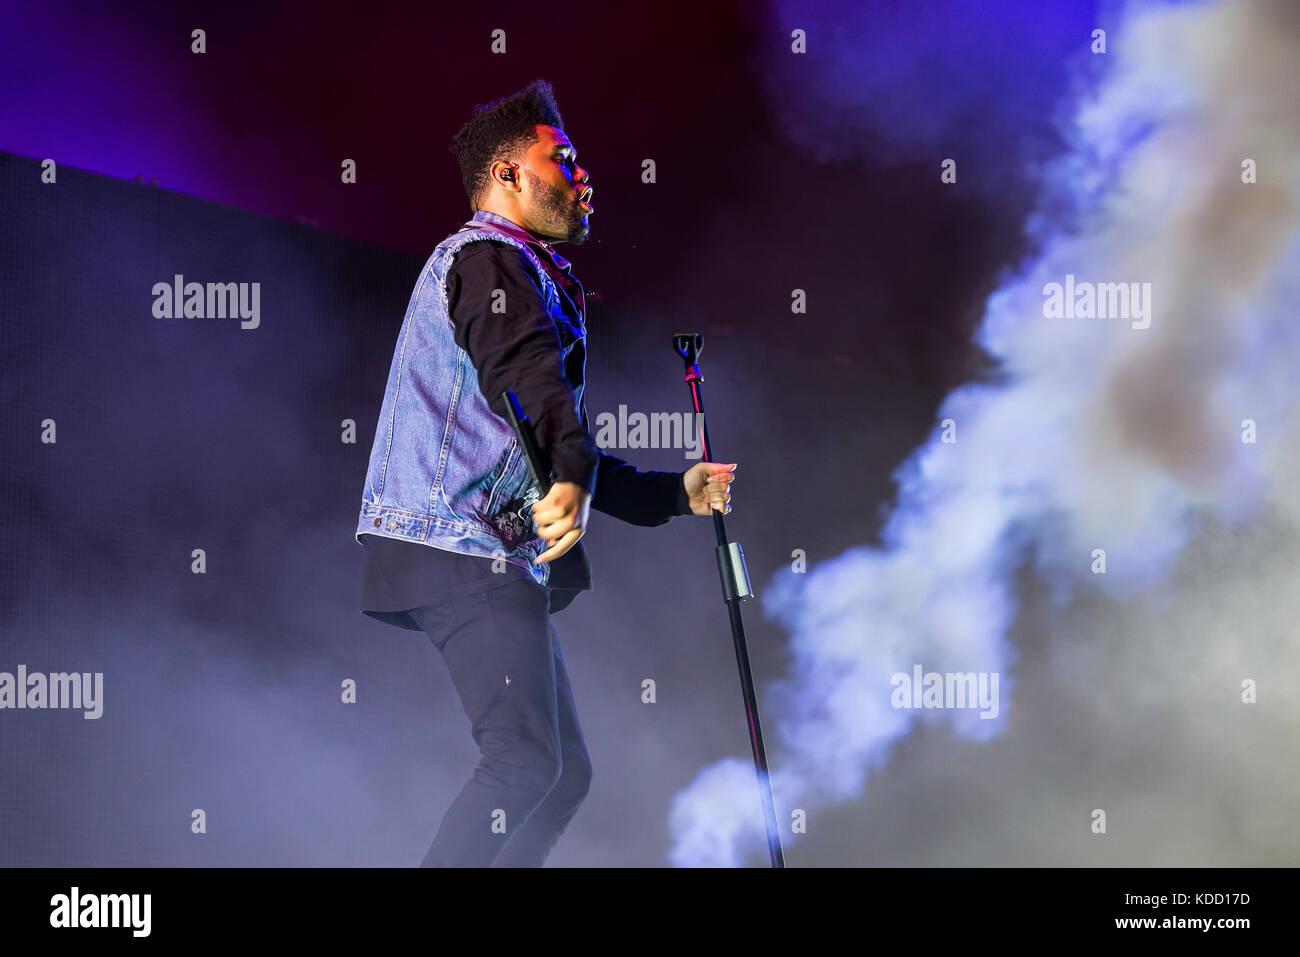 BENICASSIM, ESPAGNE - 13 juil : Le rhythm and blues (The Weeknd music band) produisent en concert au Festival le 13 juillet 2017 à Benicassim, Espagne. Banque D'Images